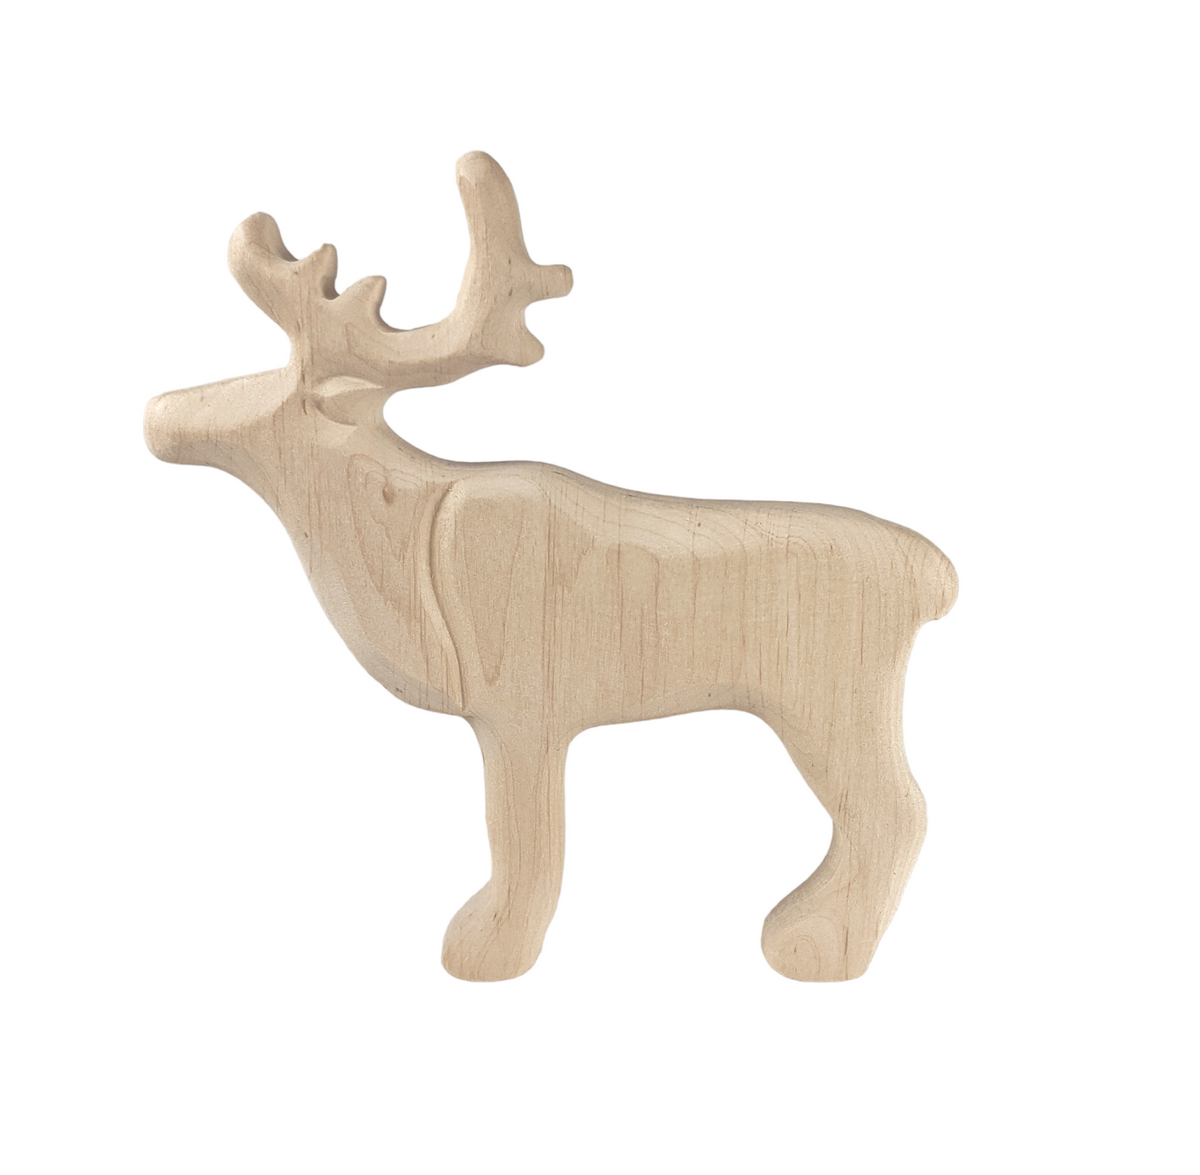 Wooden reindeer â playspire llc